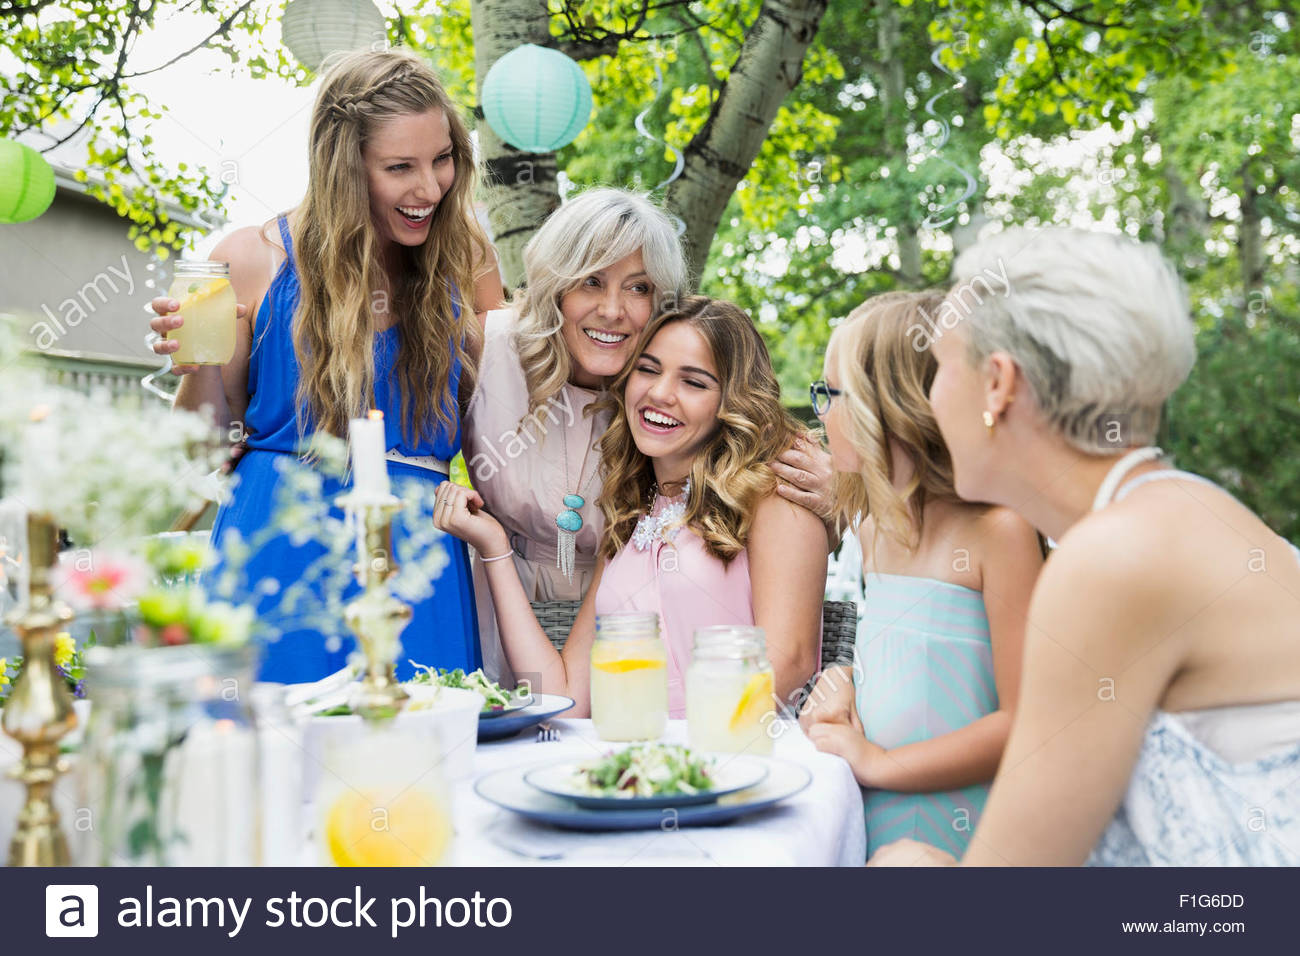 Smiling women family enjoying garden party lunch Stock Photo